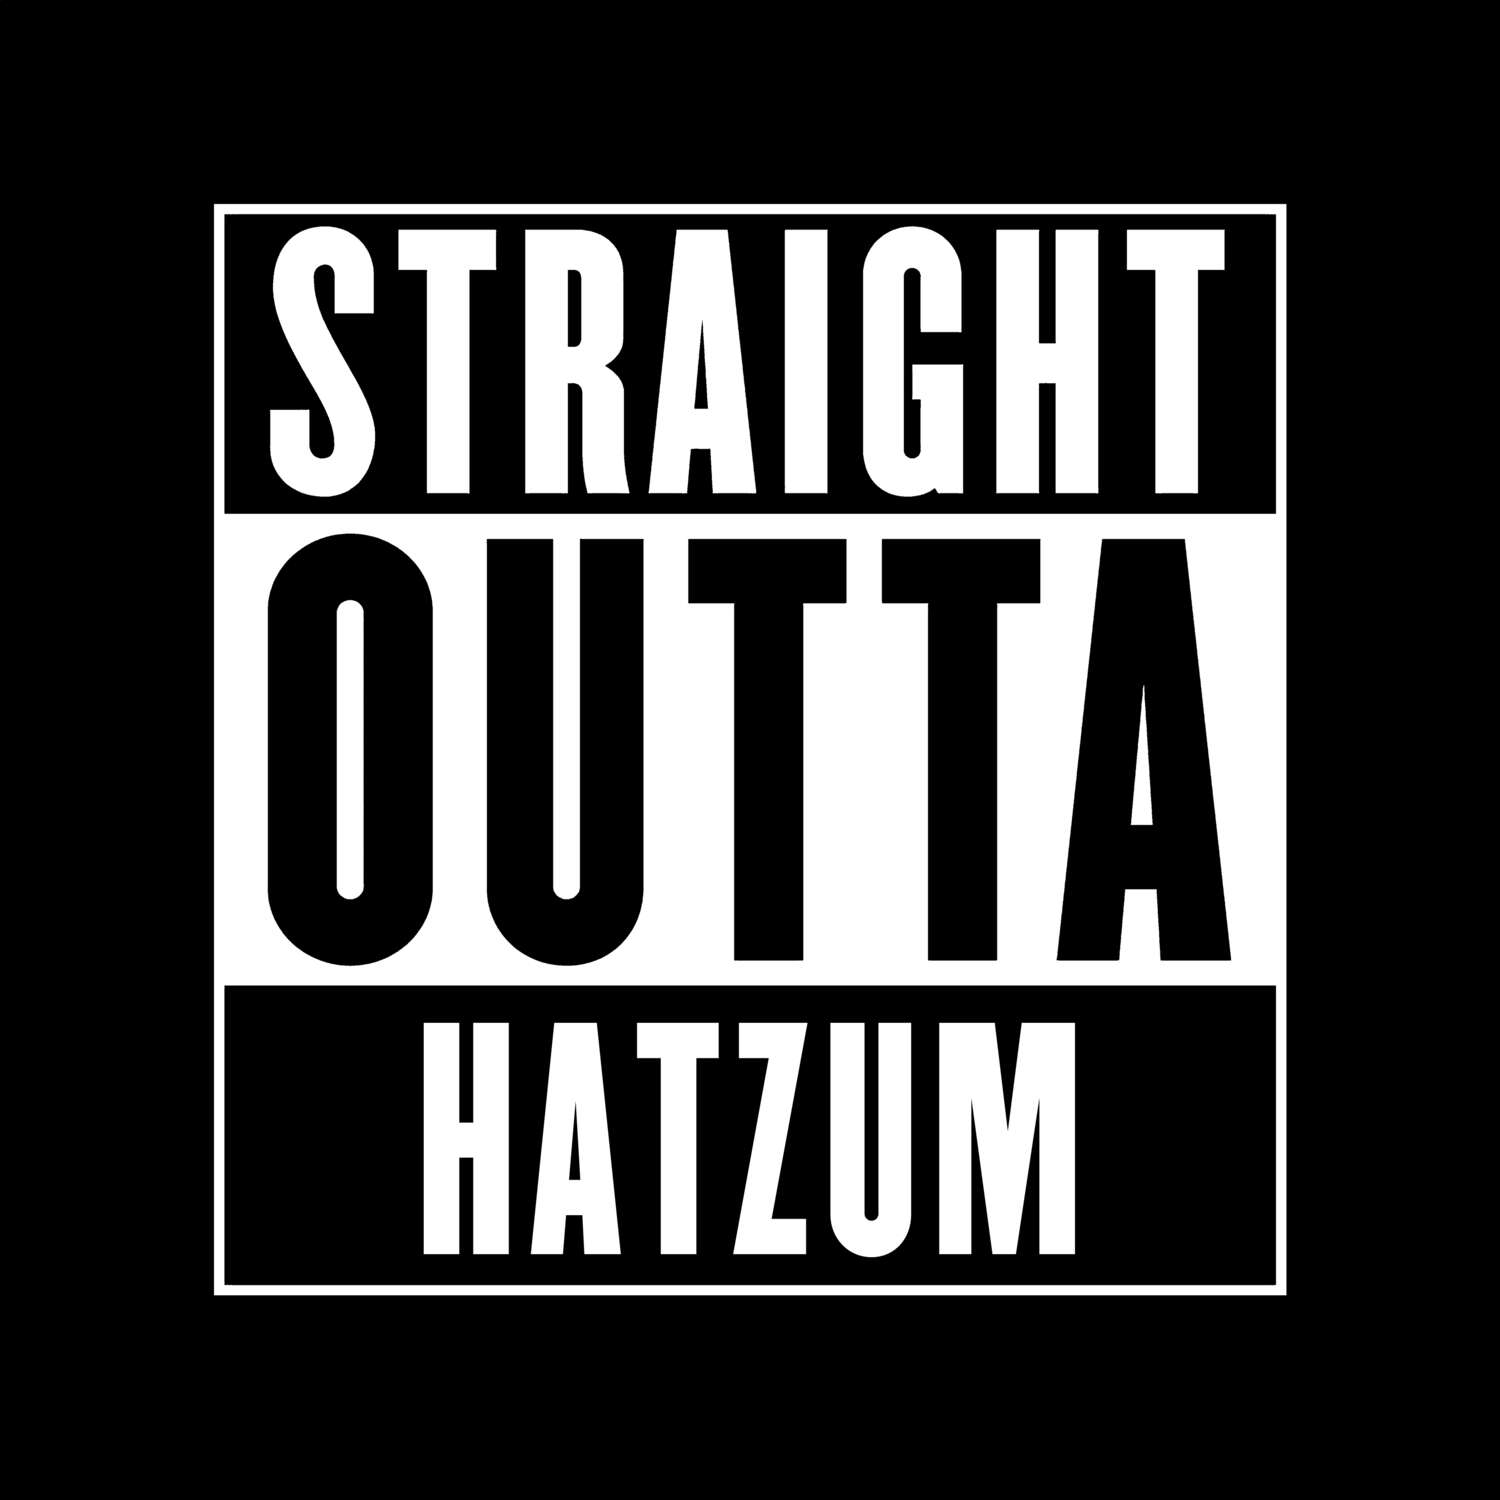 Hatzum T-Shirt »Straight Outta«